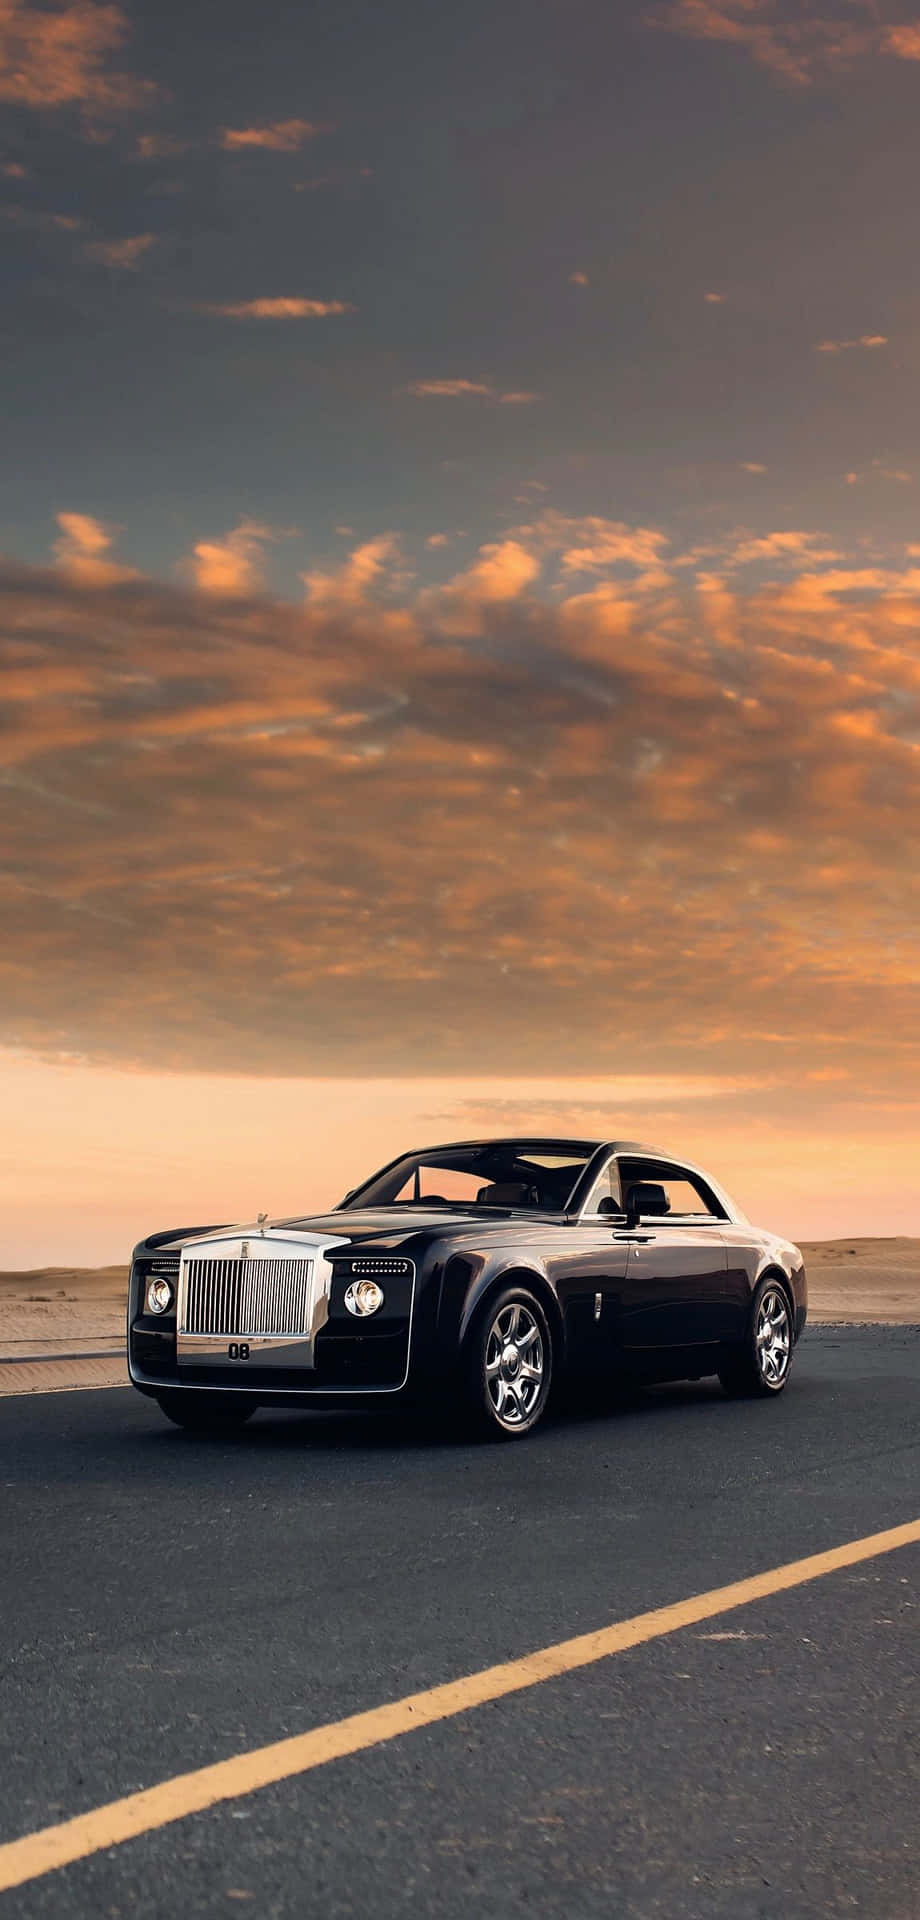 Caption: Luxurious Rolls Royce Sweptail Wallpaper